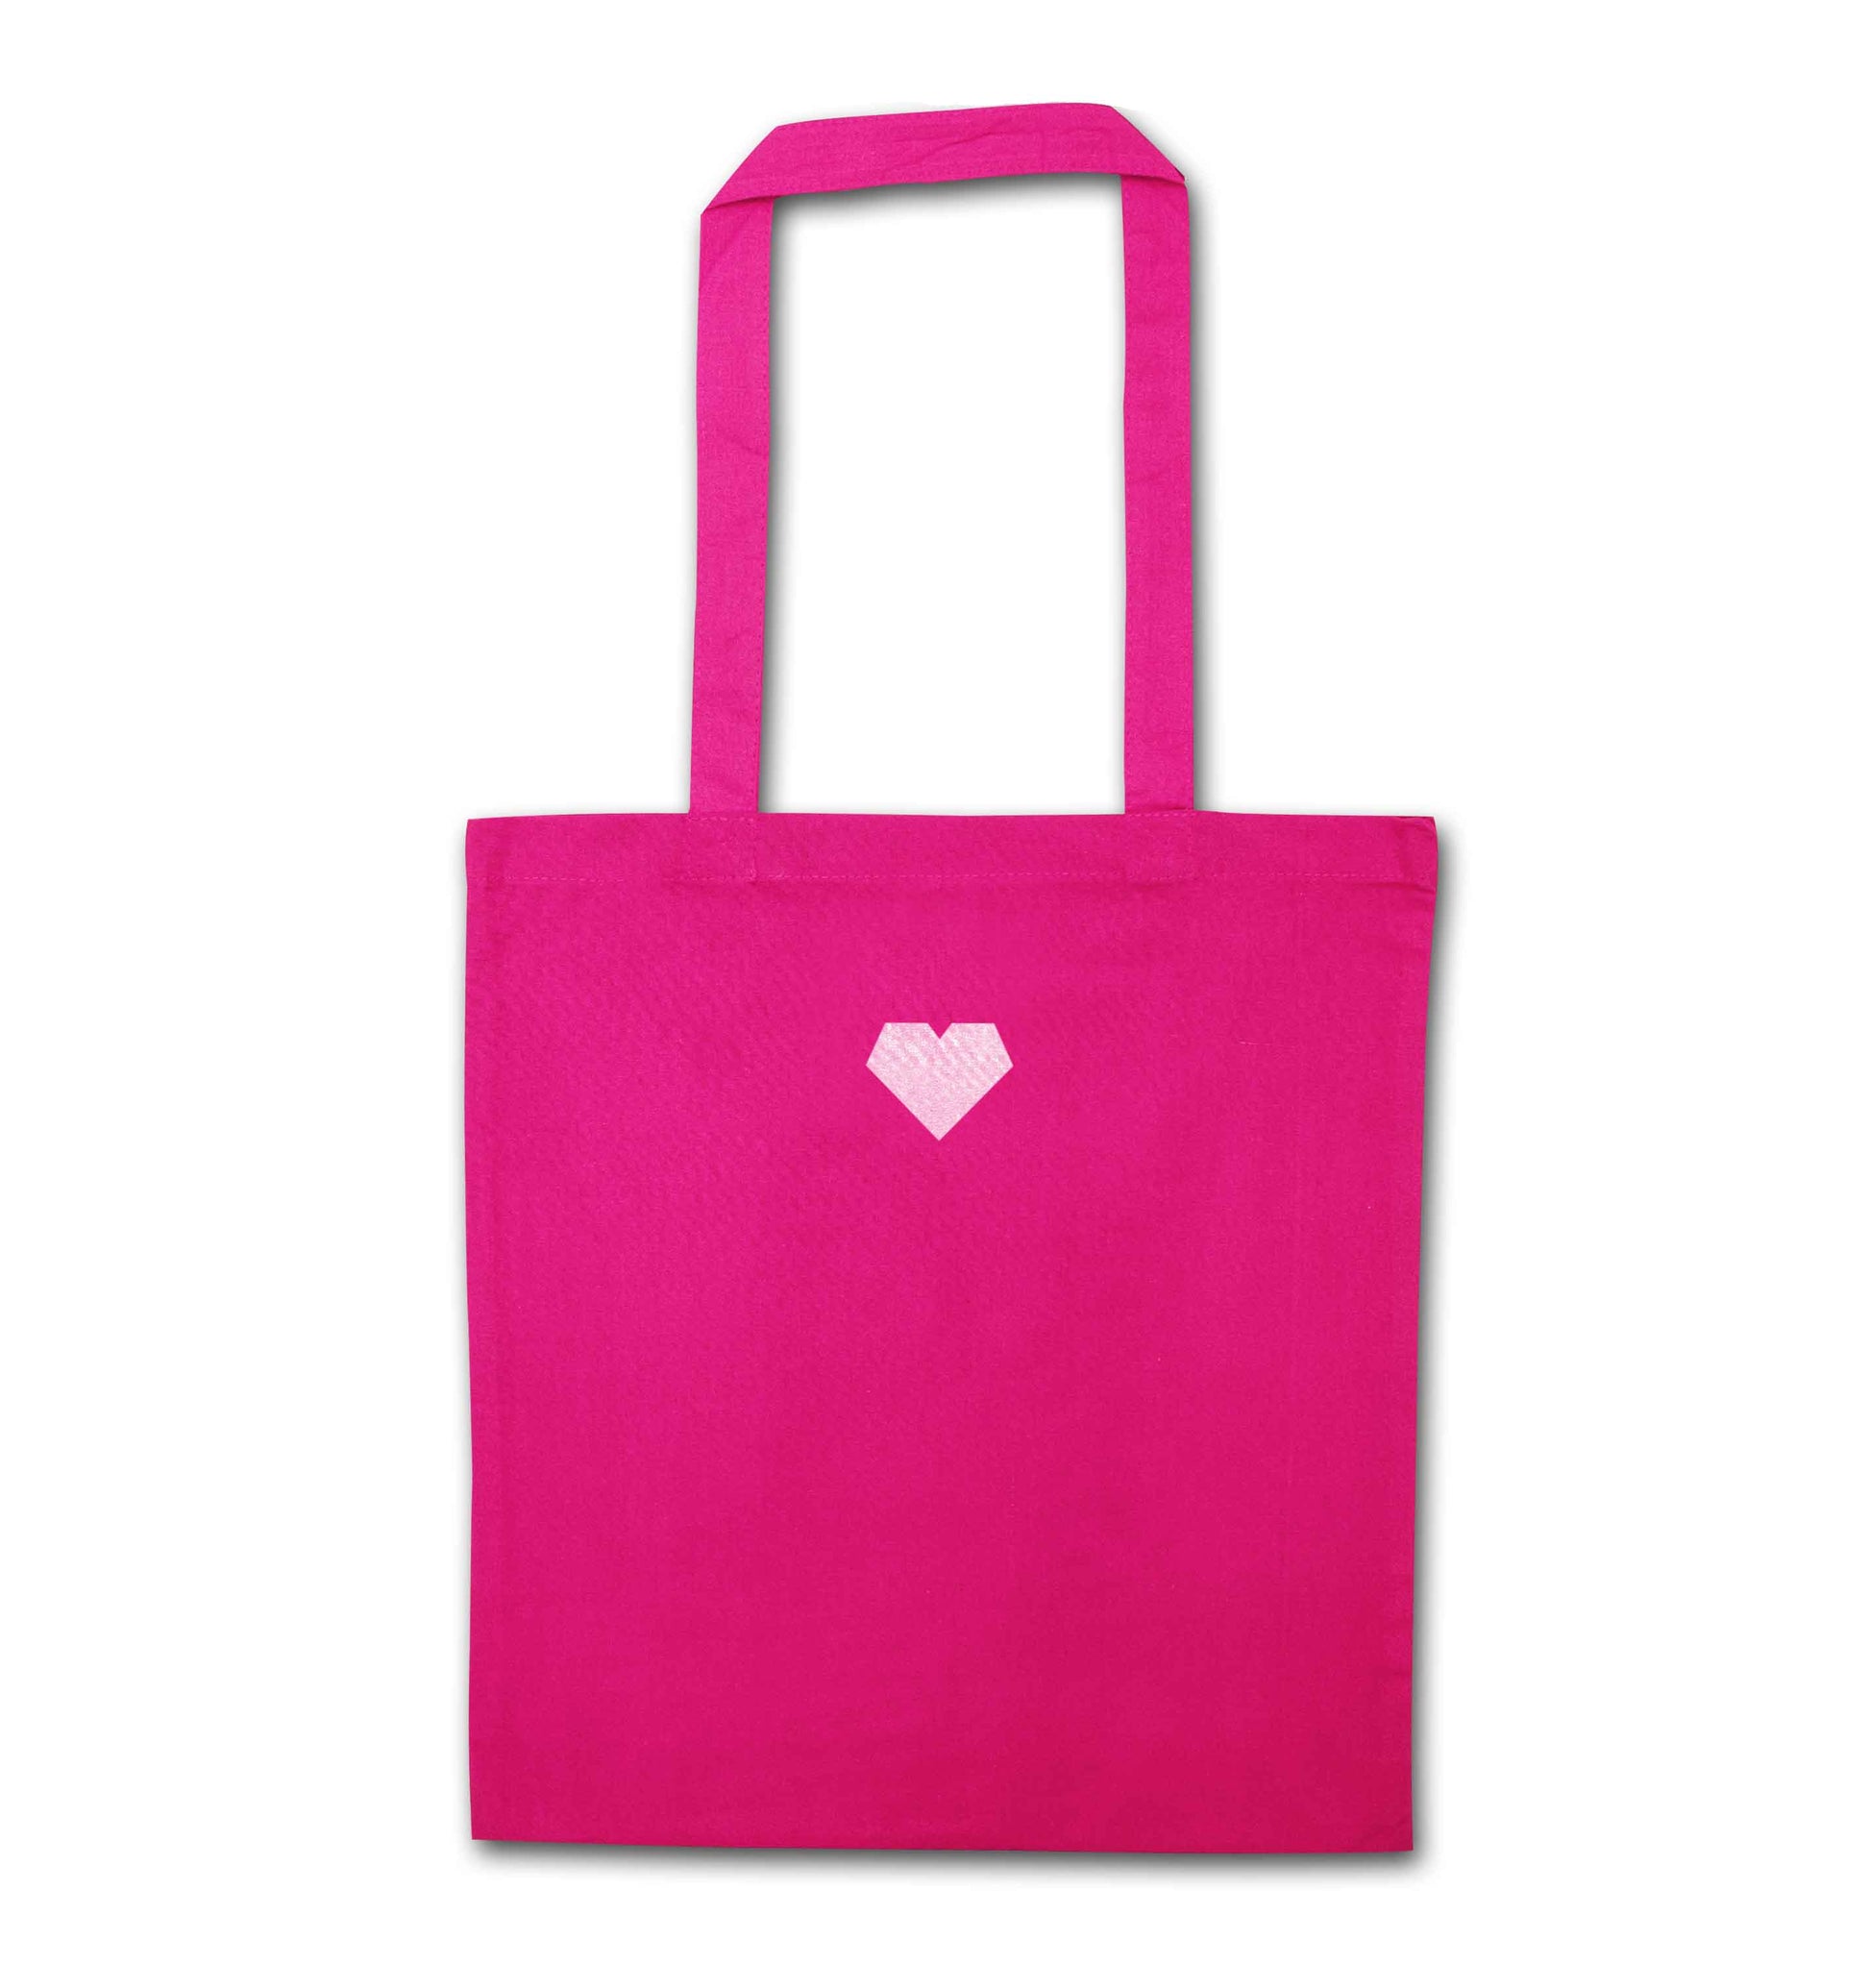 Tiny heart pink tote bag